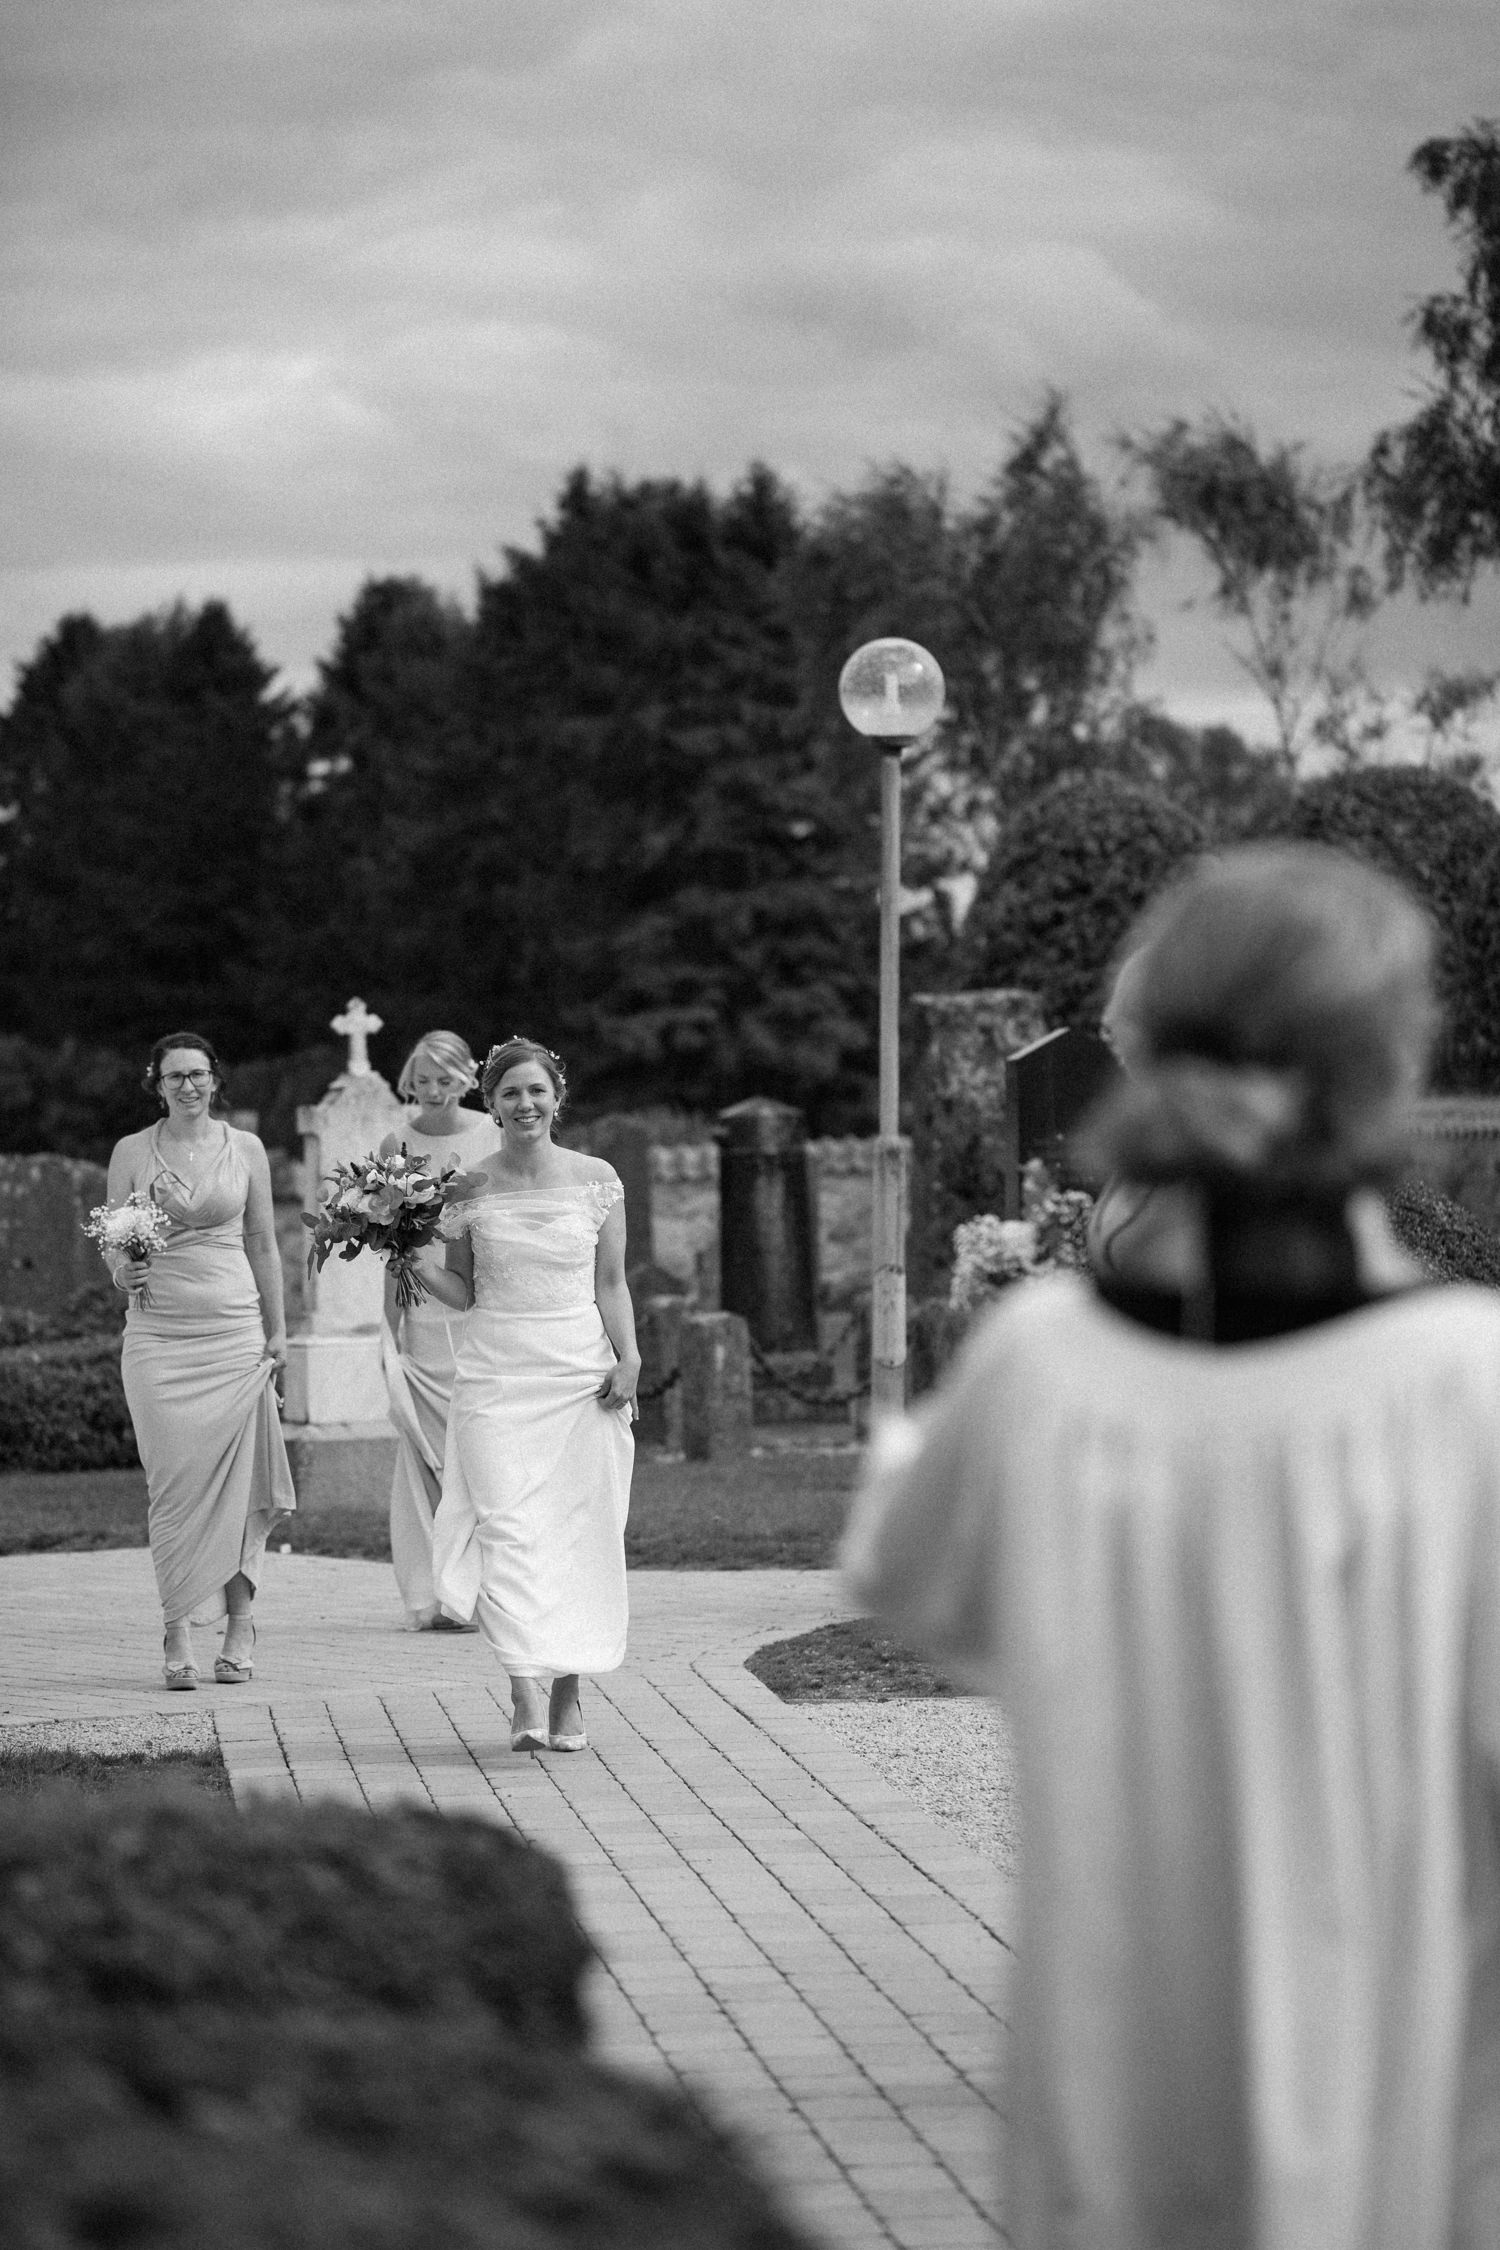 Bröllop i Köpinge Kyrka, Gärds Köpinge i Skåne. Fotograf är Tove Lundquist.